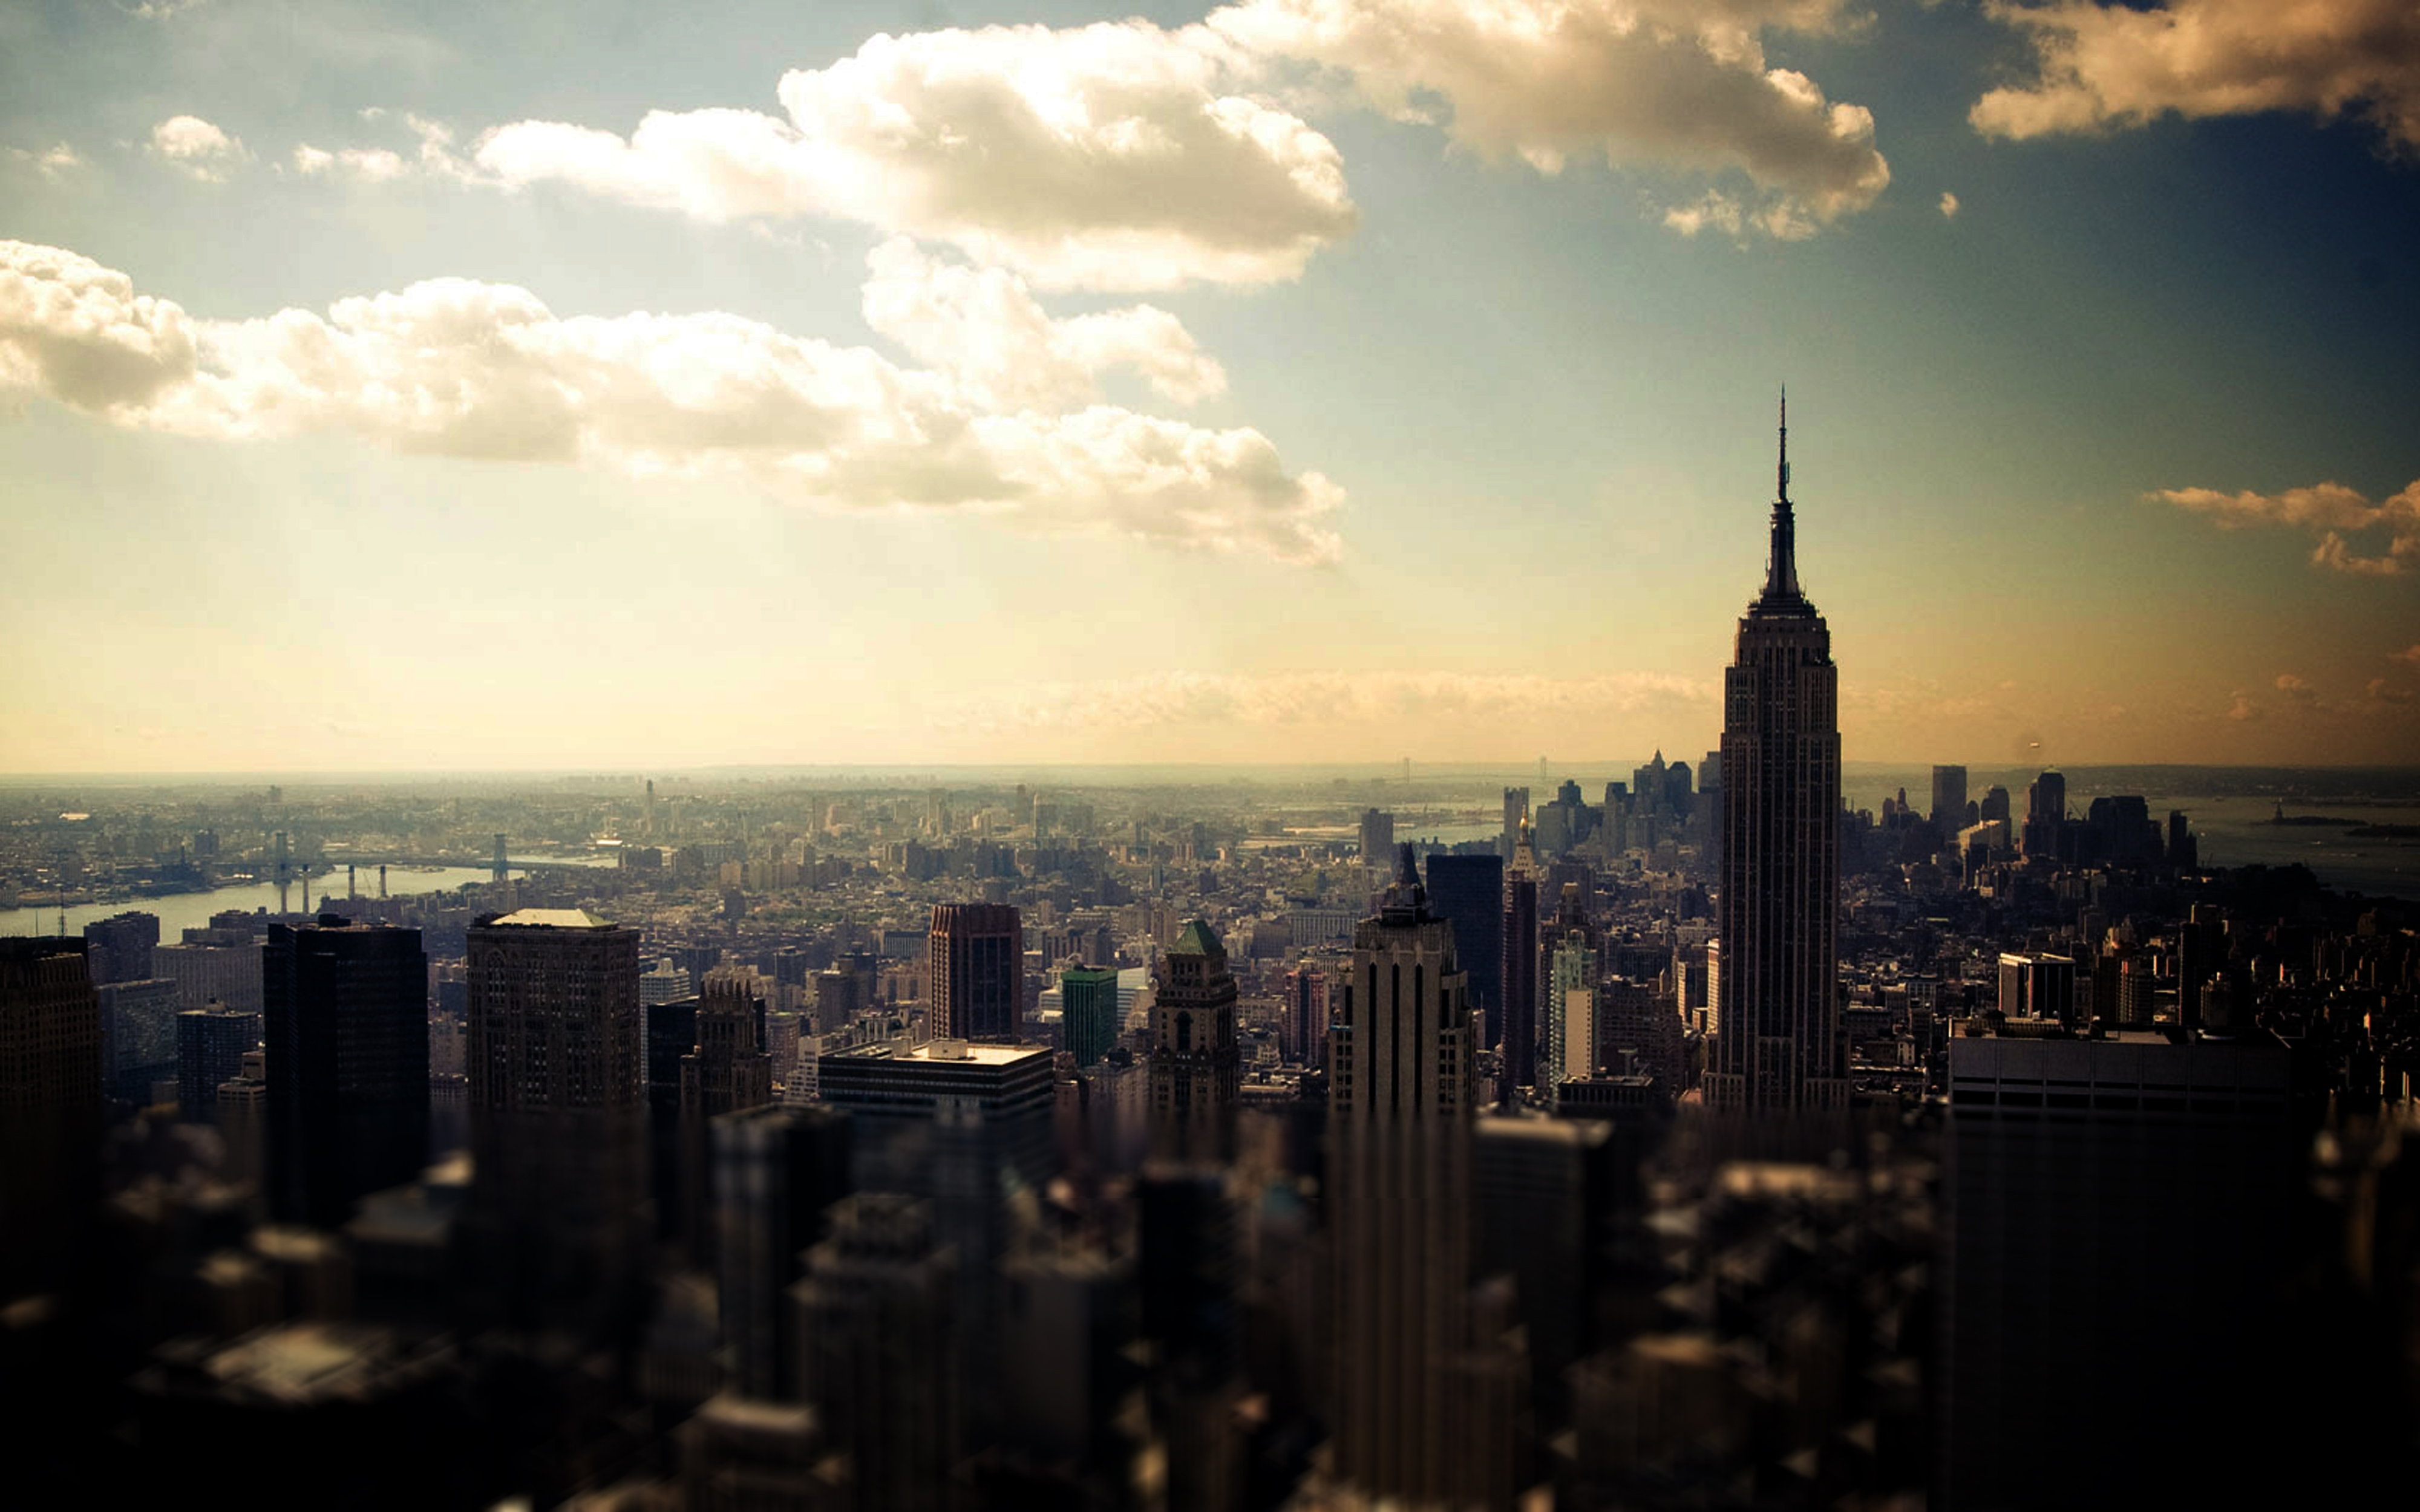 fondos de pantalla tumblr de nueva york,paisaje urbano,área metropolitana,ciudad,área urbana,rascacielos